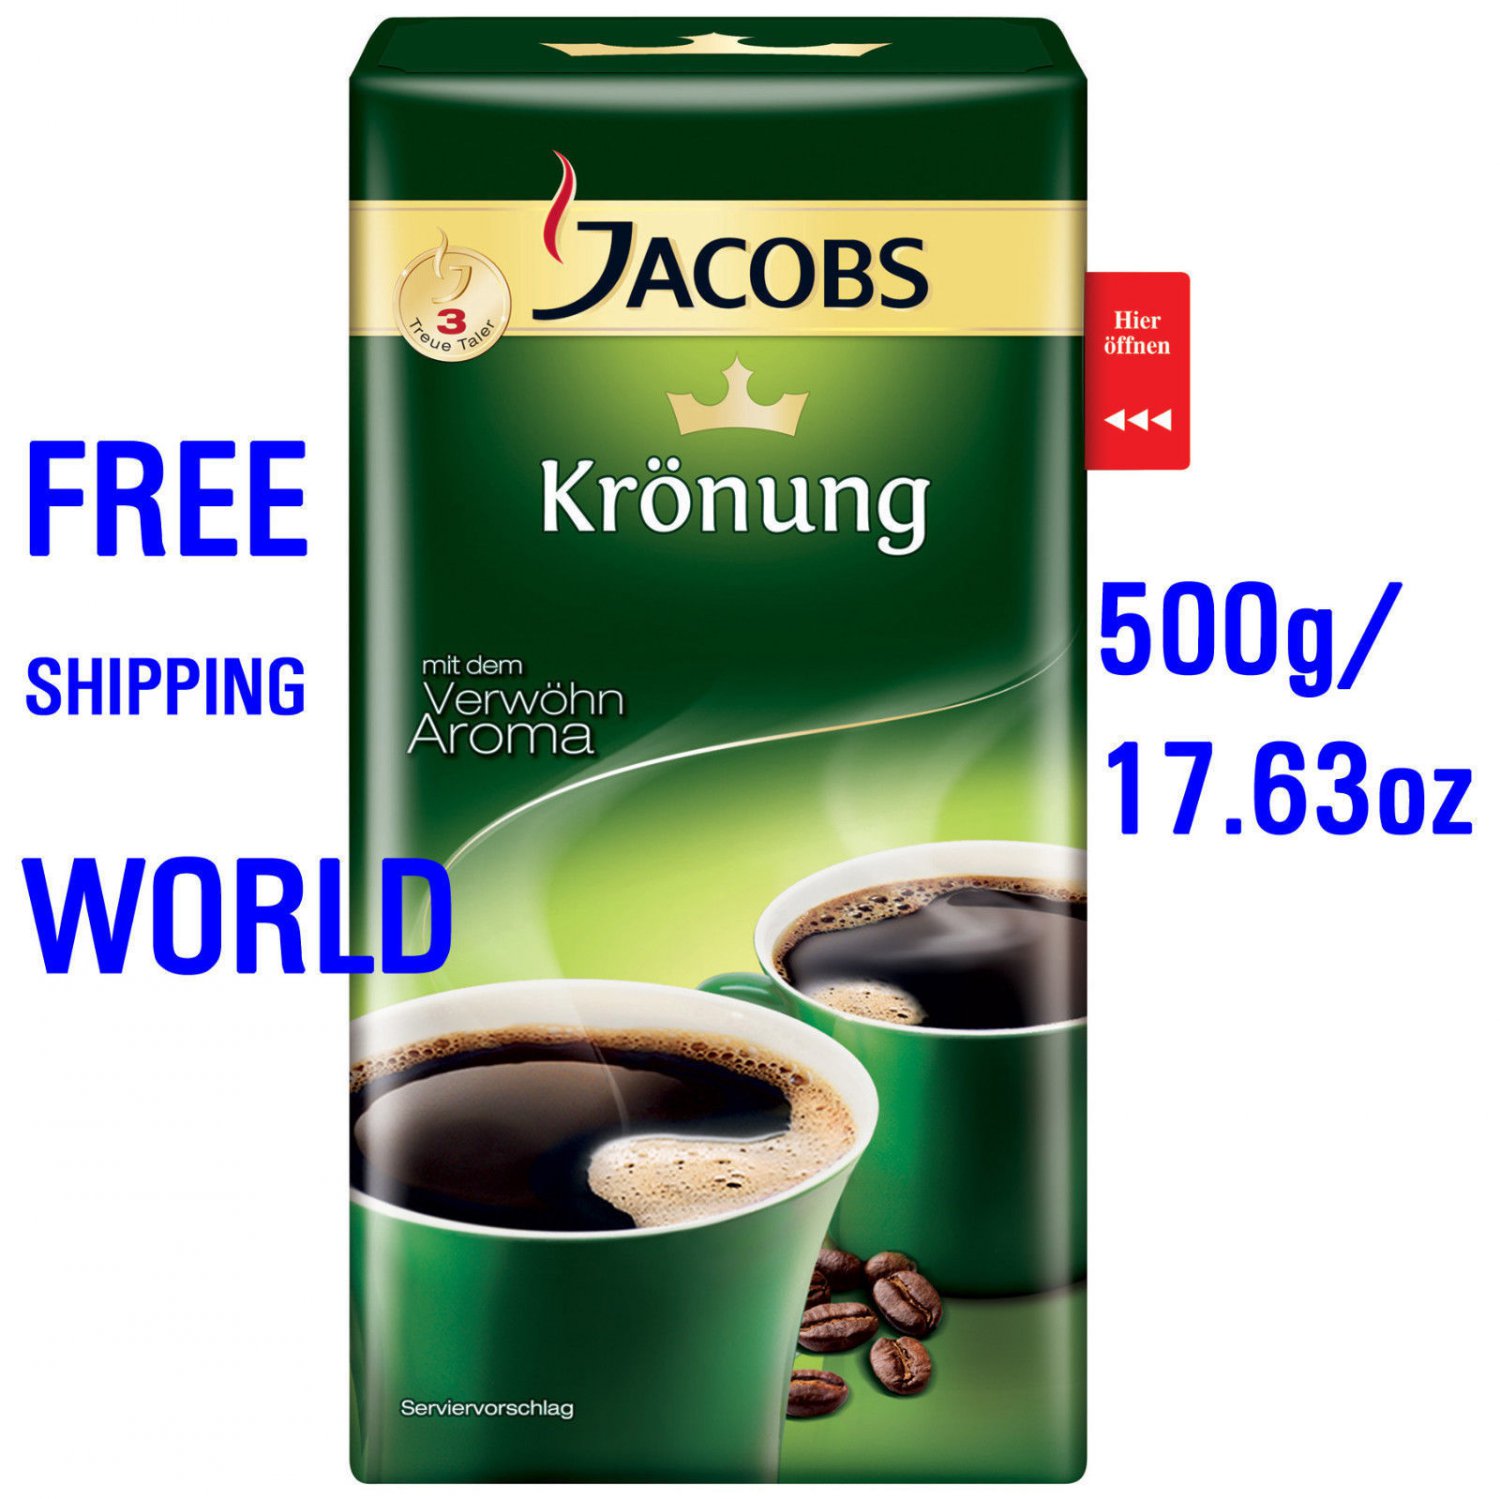 Молотый кофе 500 г. Jacobs Kronung 500g. Кофе Jacobs Kronung. Кофе Якобс Кронунг 500 г.. Кофе Якобс Кронинг молотый.